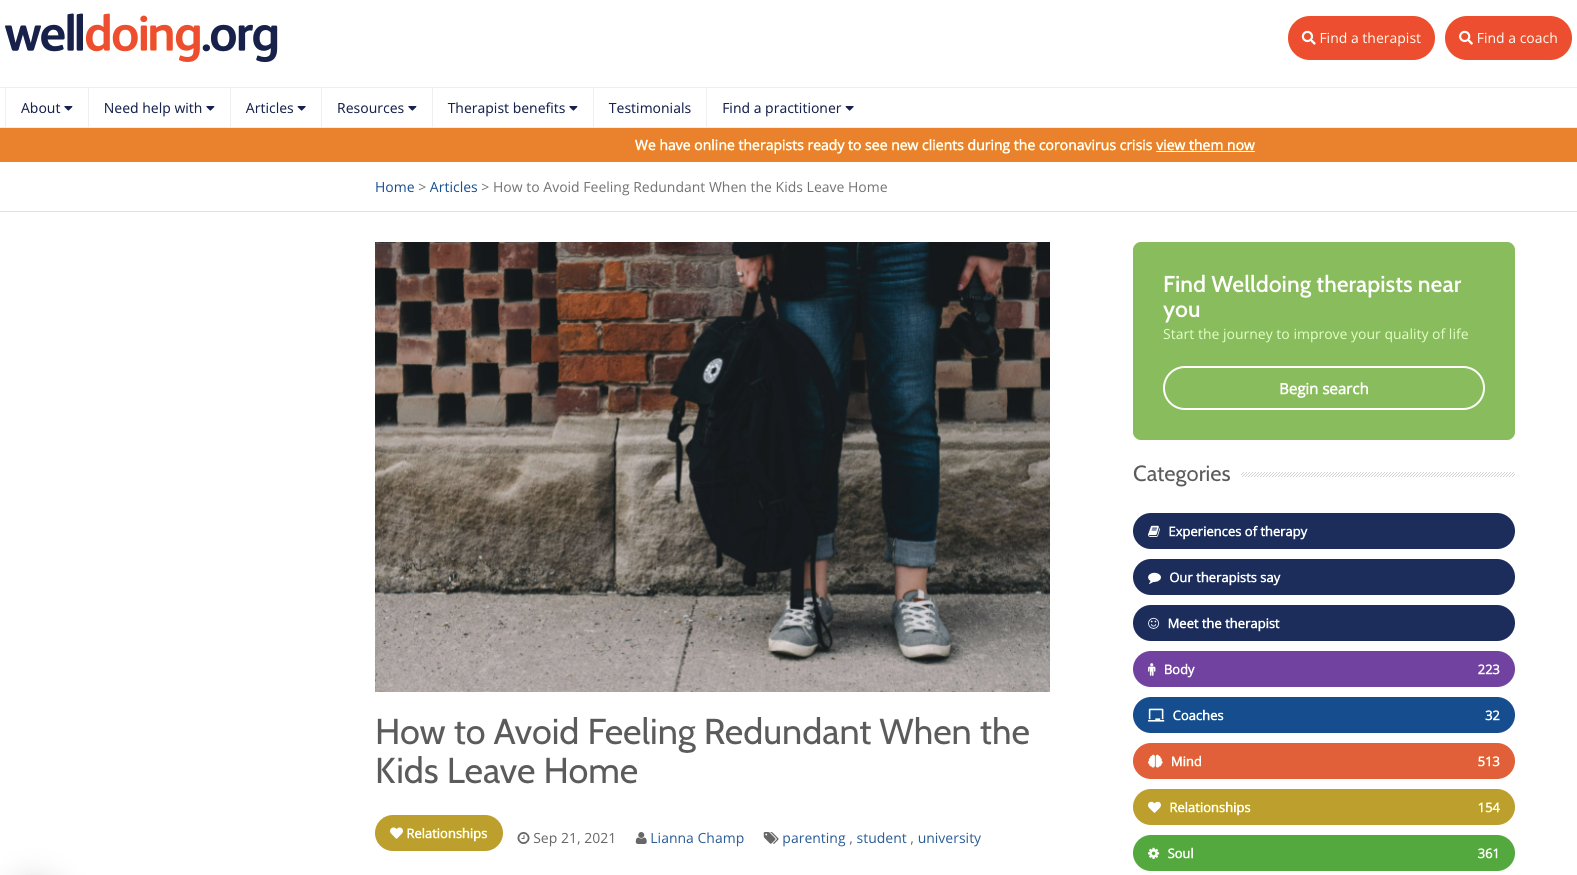 How to Avoid Feeling Redundant When the Kids Leave Home